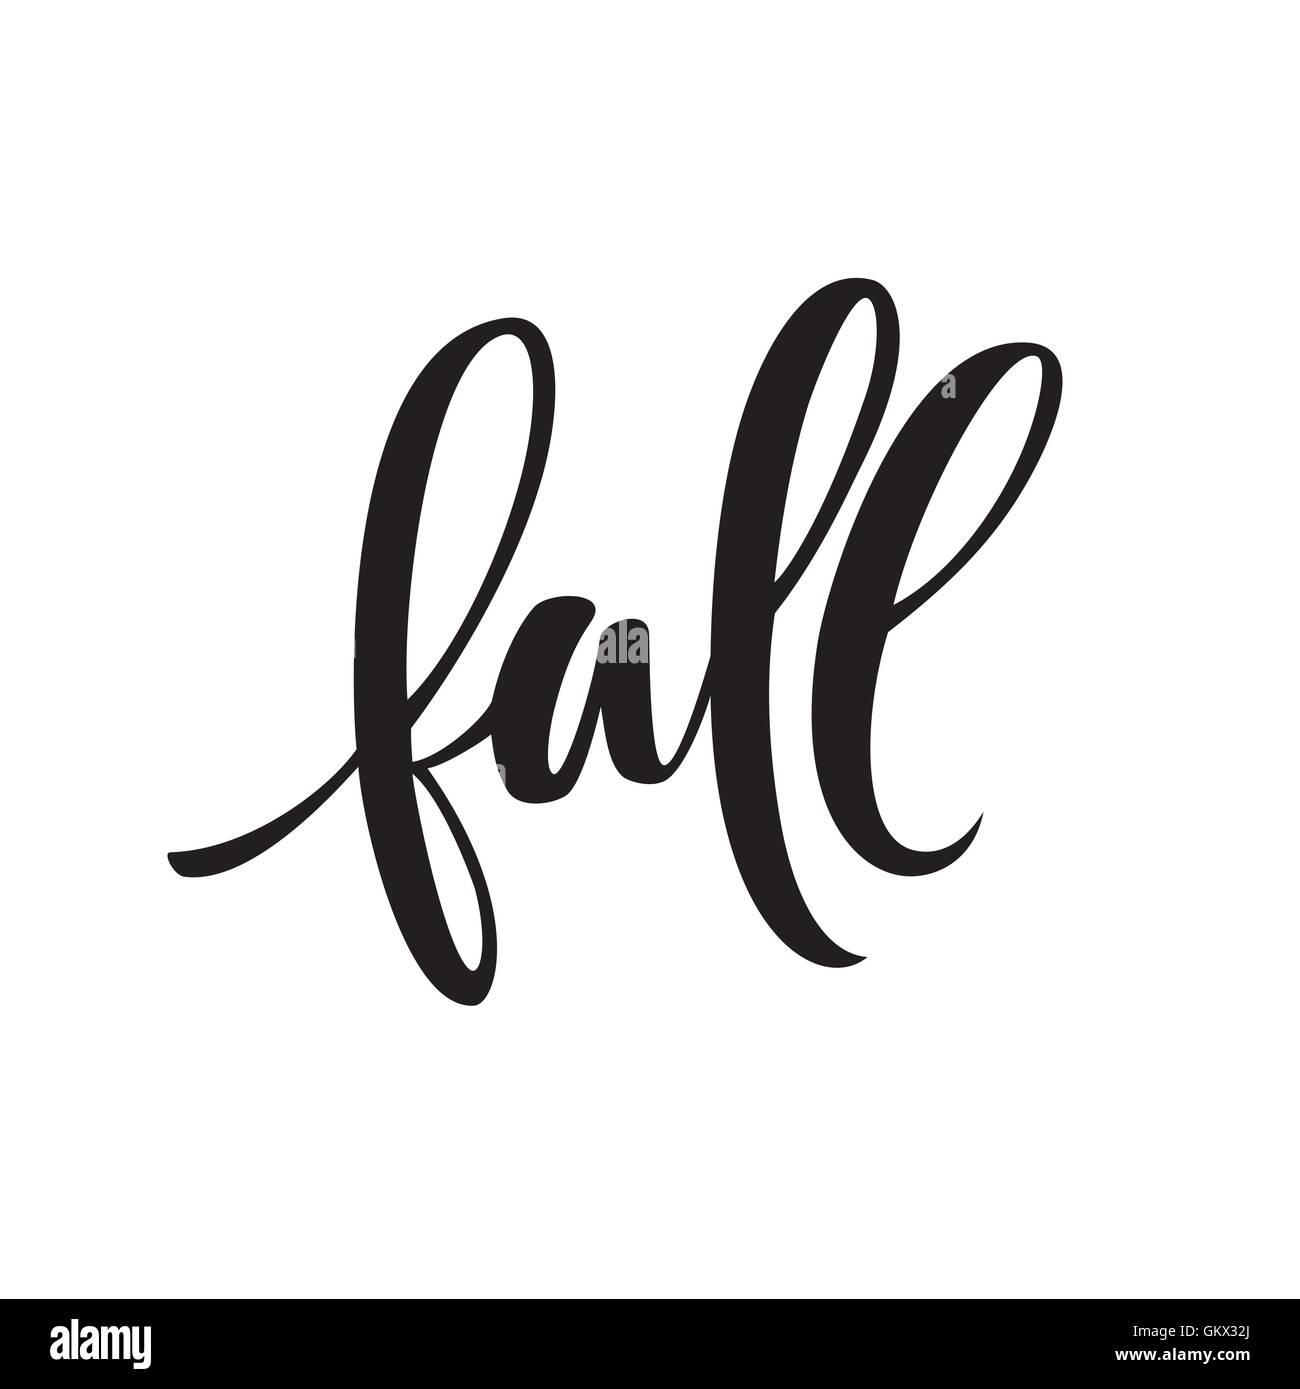 Fall script